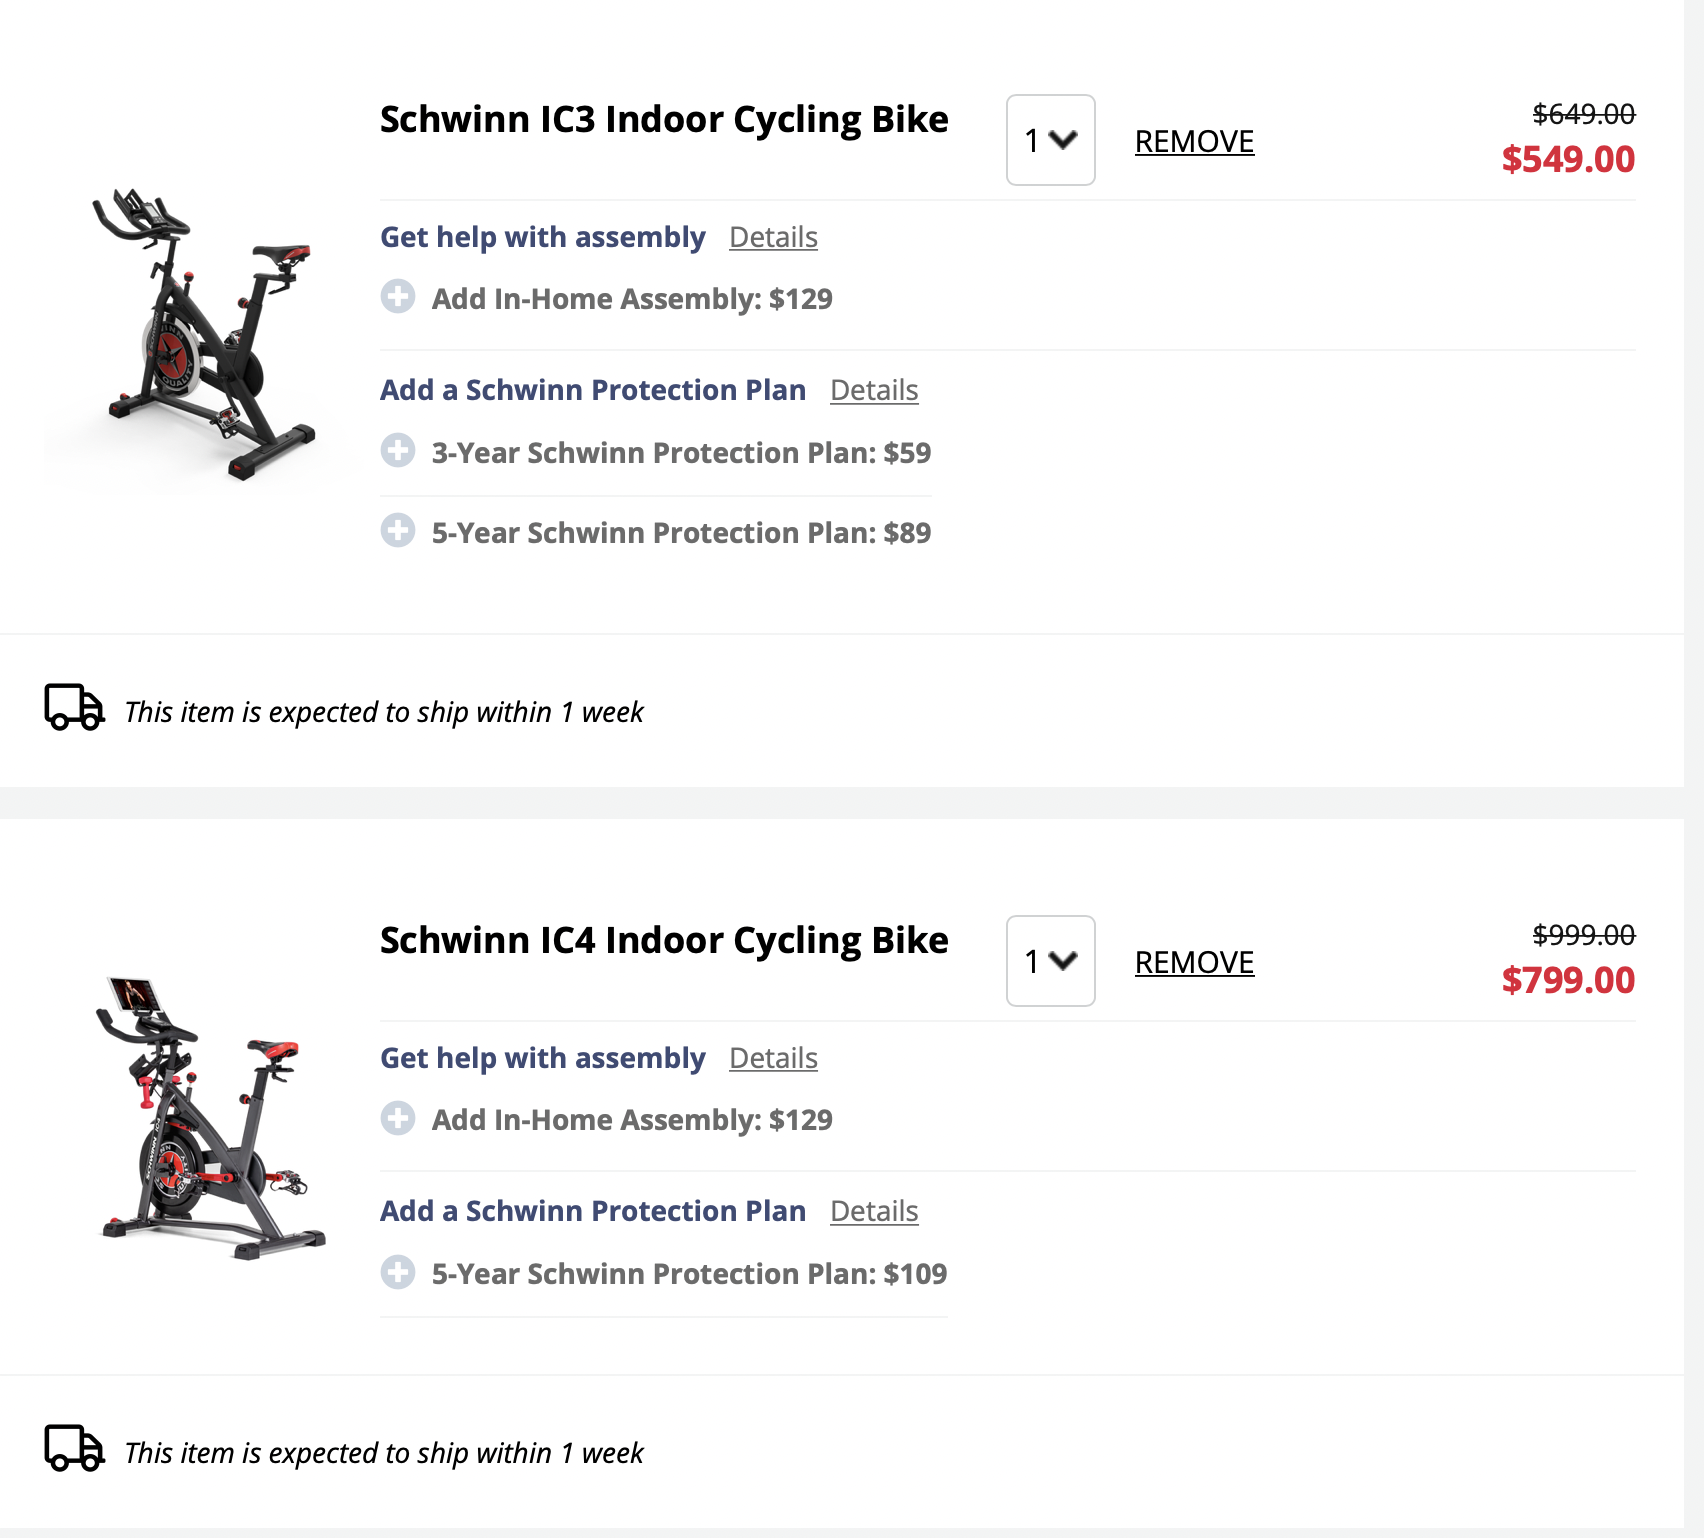 SwSchwinn IC4 Indoor Cycling Bike $200 off + Free Shipping $799